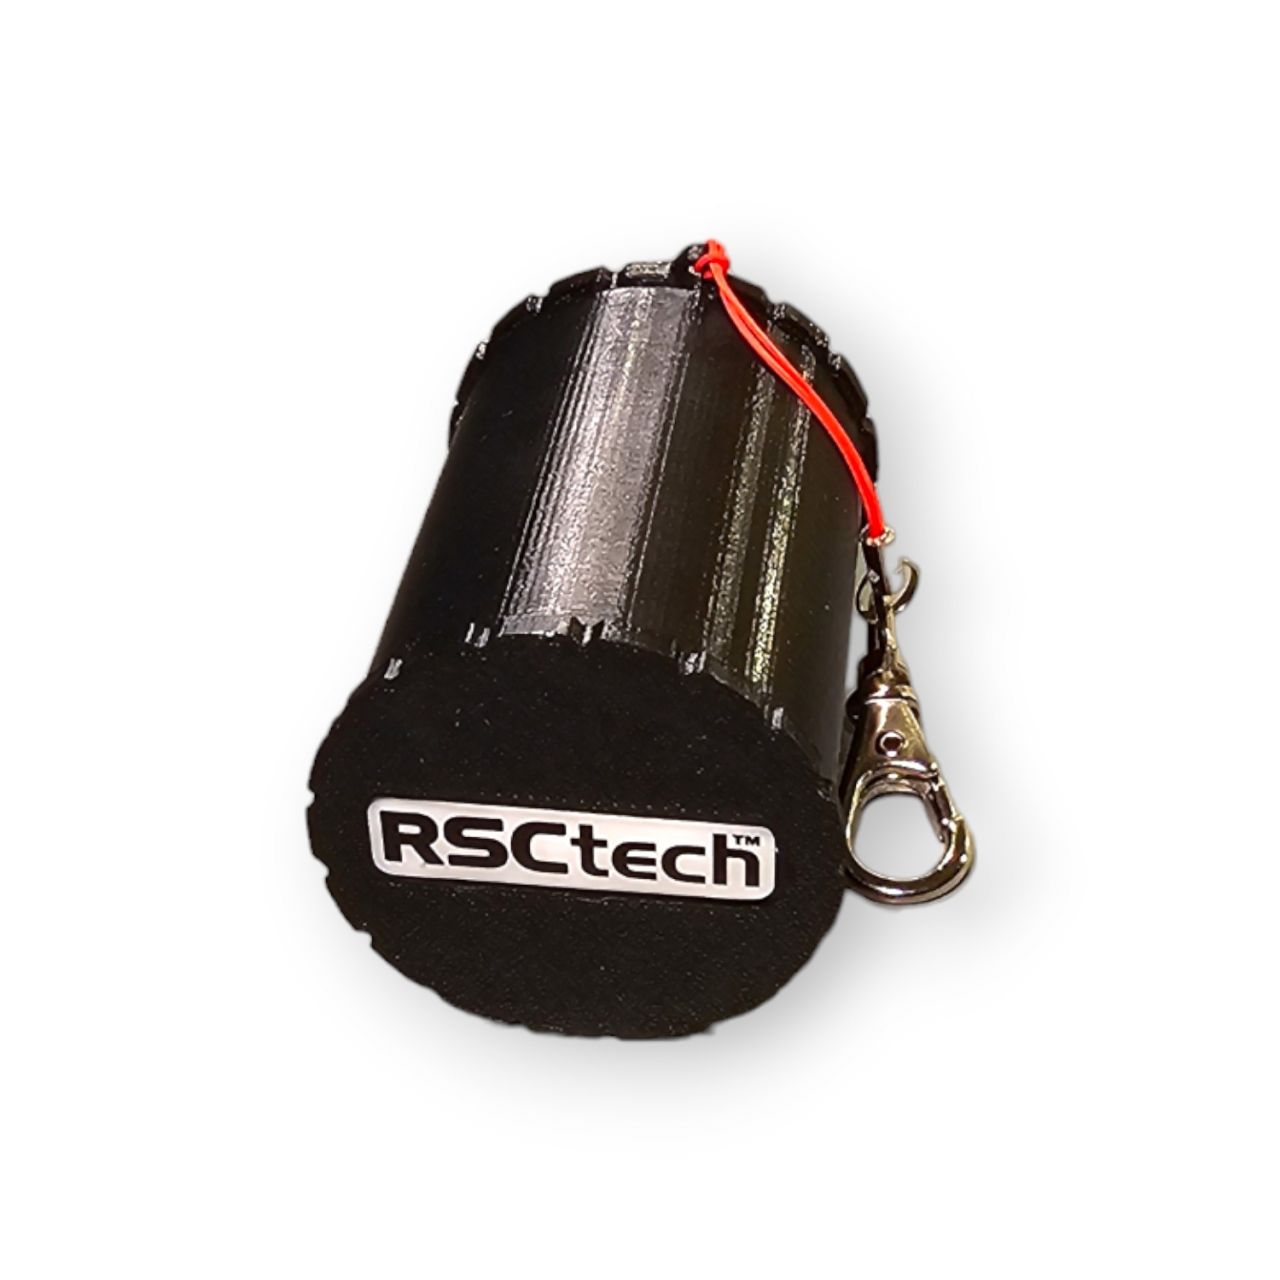 RSCtech - Matrica tartó karbantartóknak